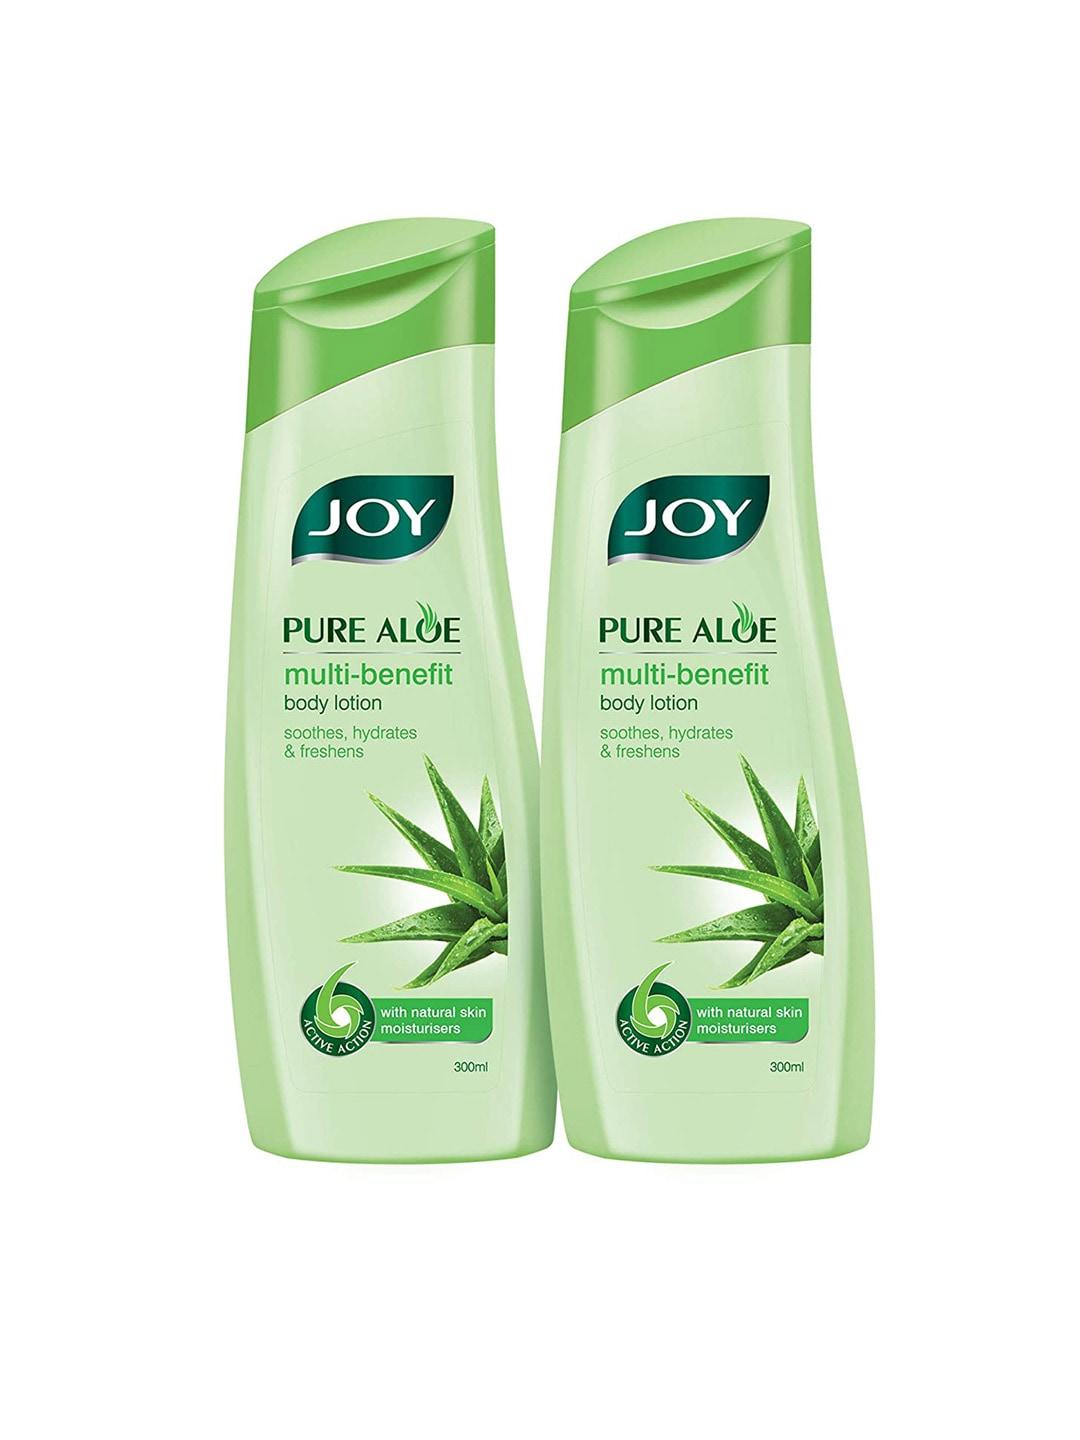 joy pure aloe set of 2 multi-benefit aloe vera body lotion-300 ml each